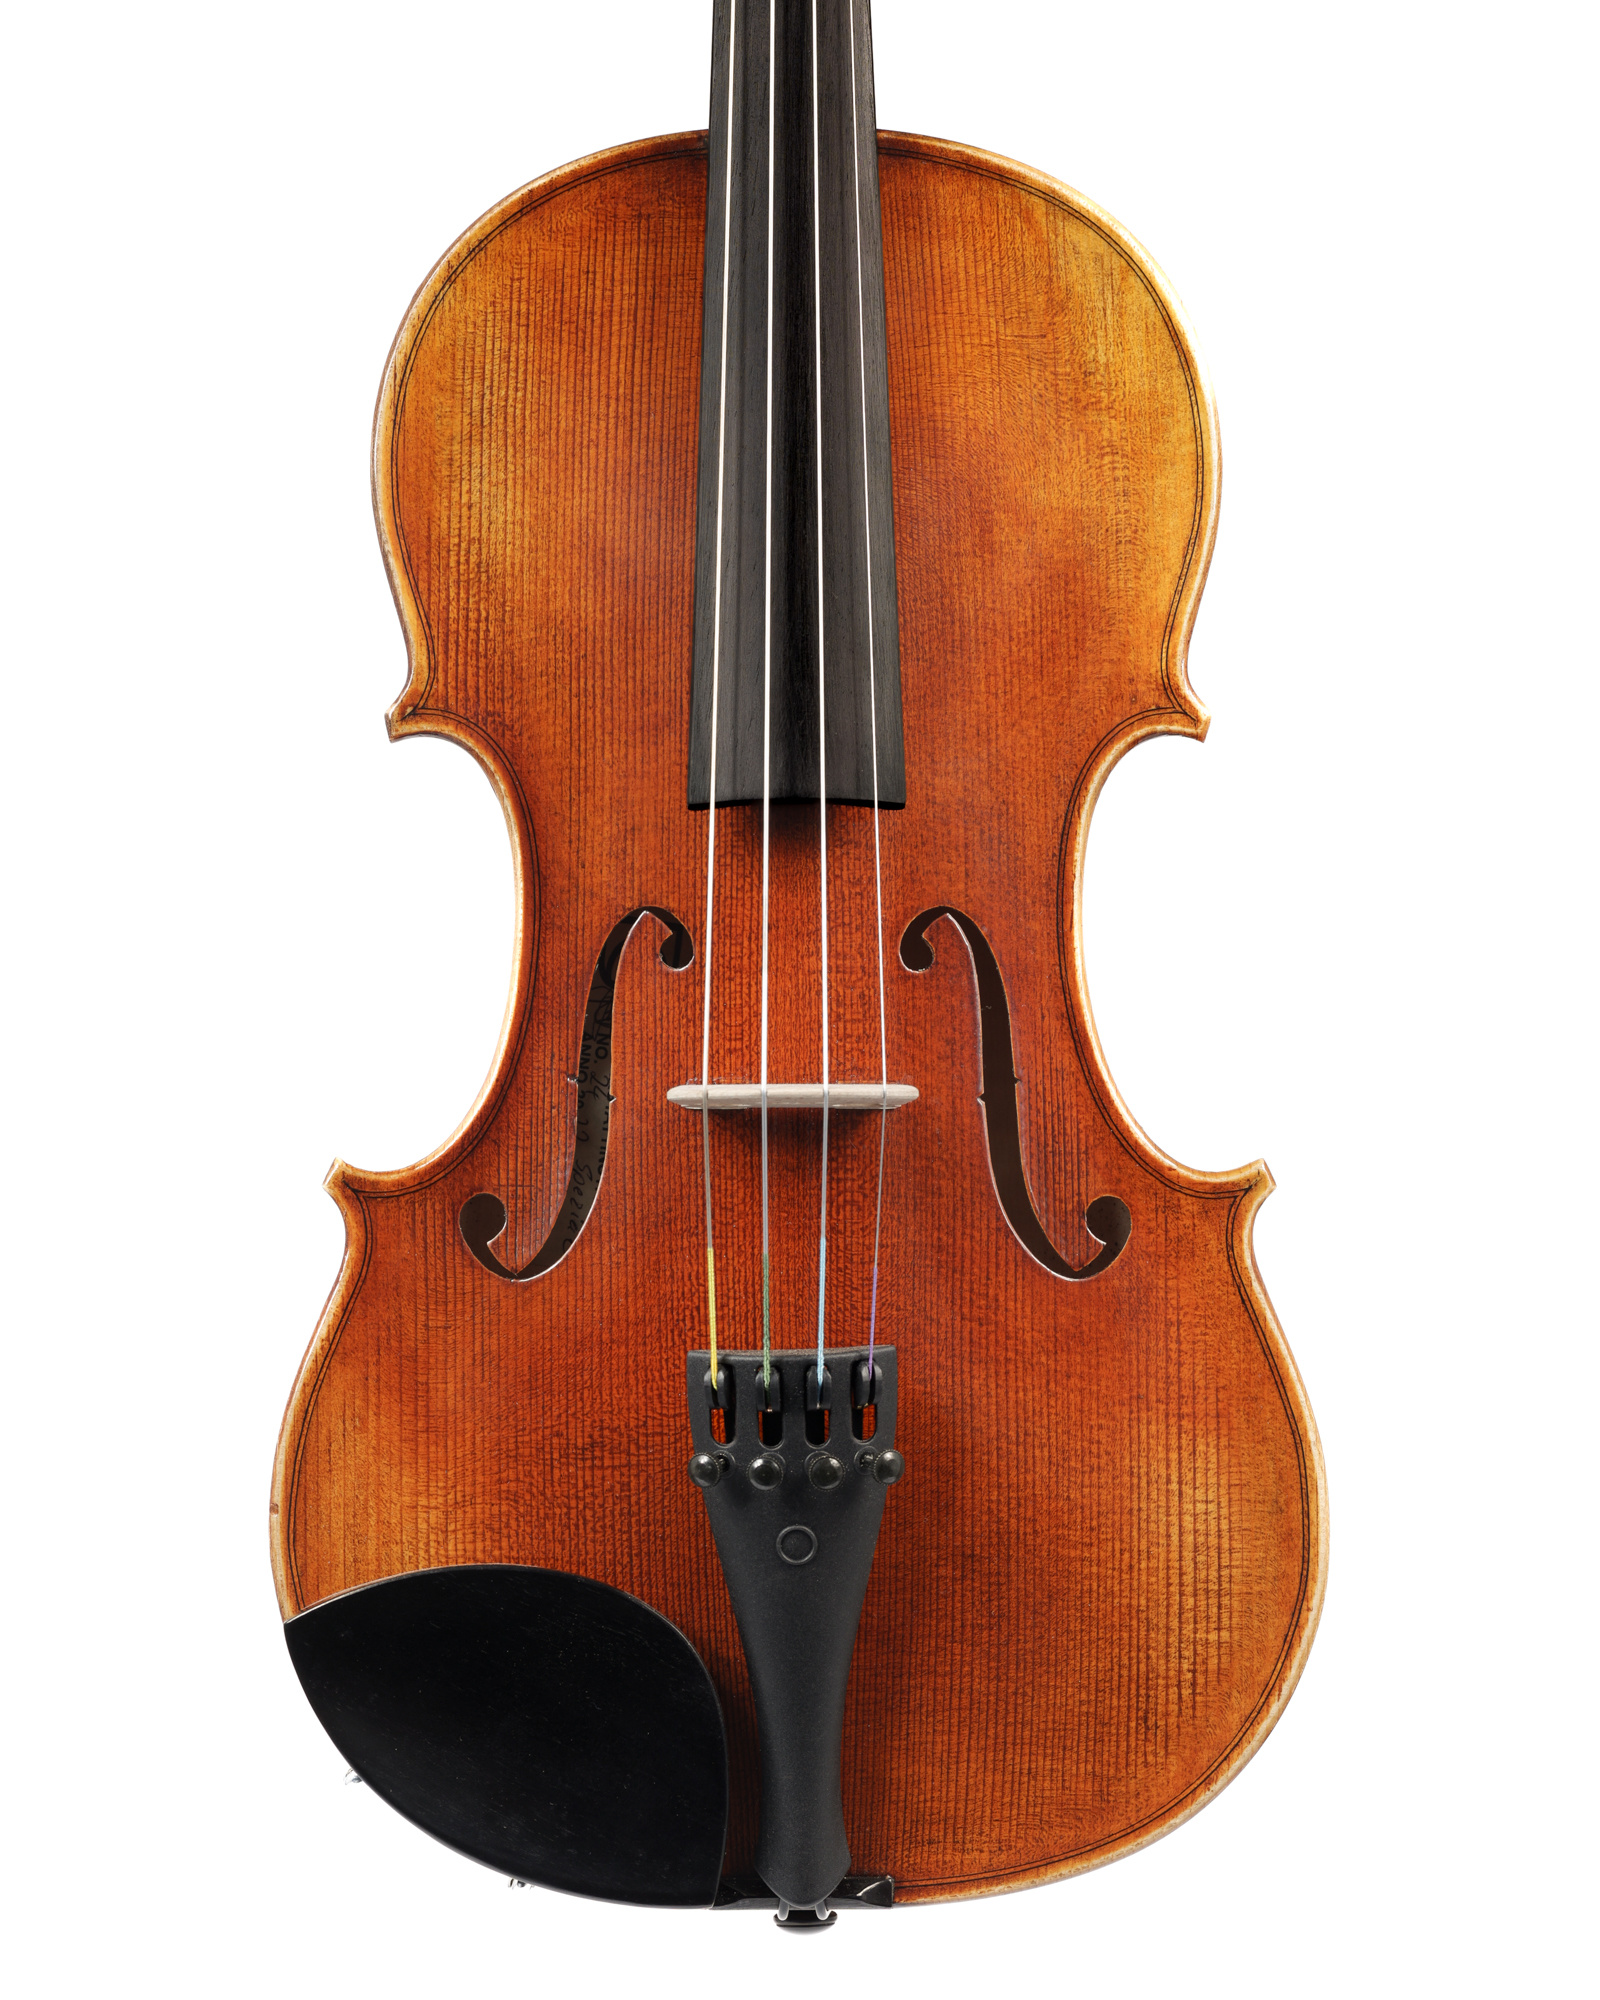 Bieg Lutherie Spezial violin, 2022, model 24, GERMANY